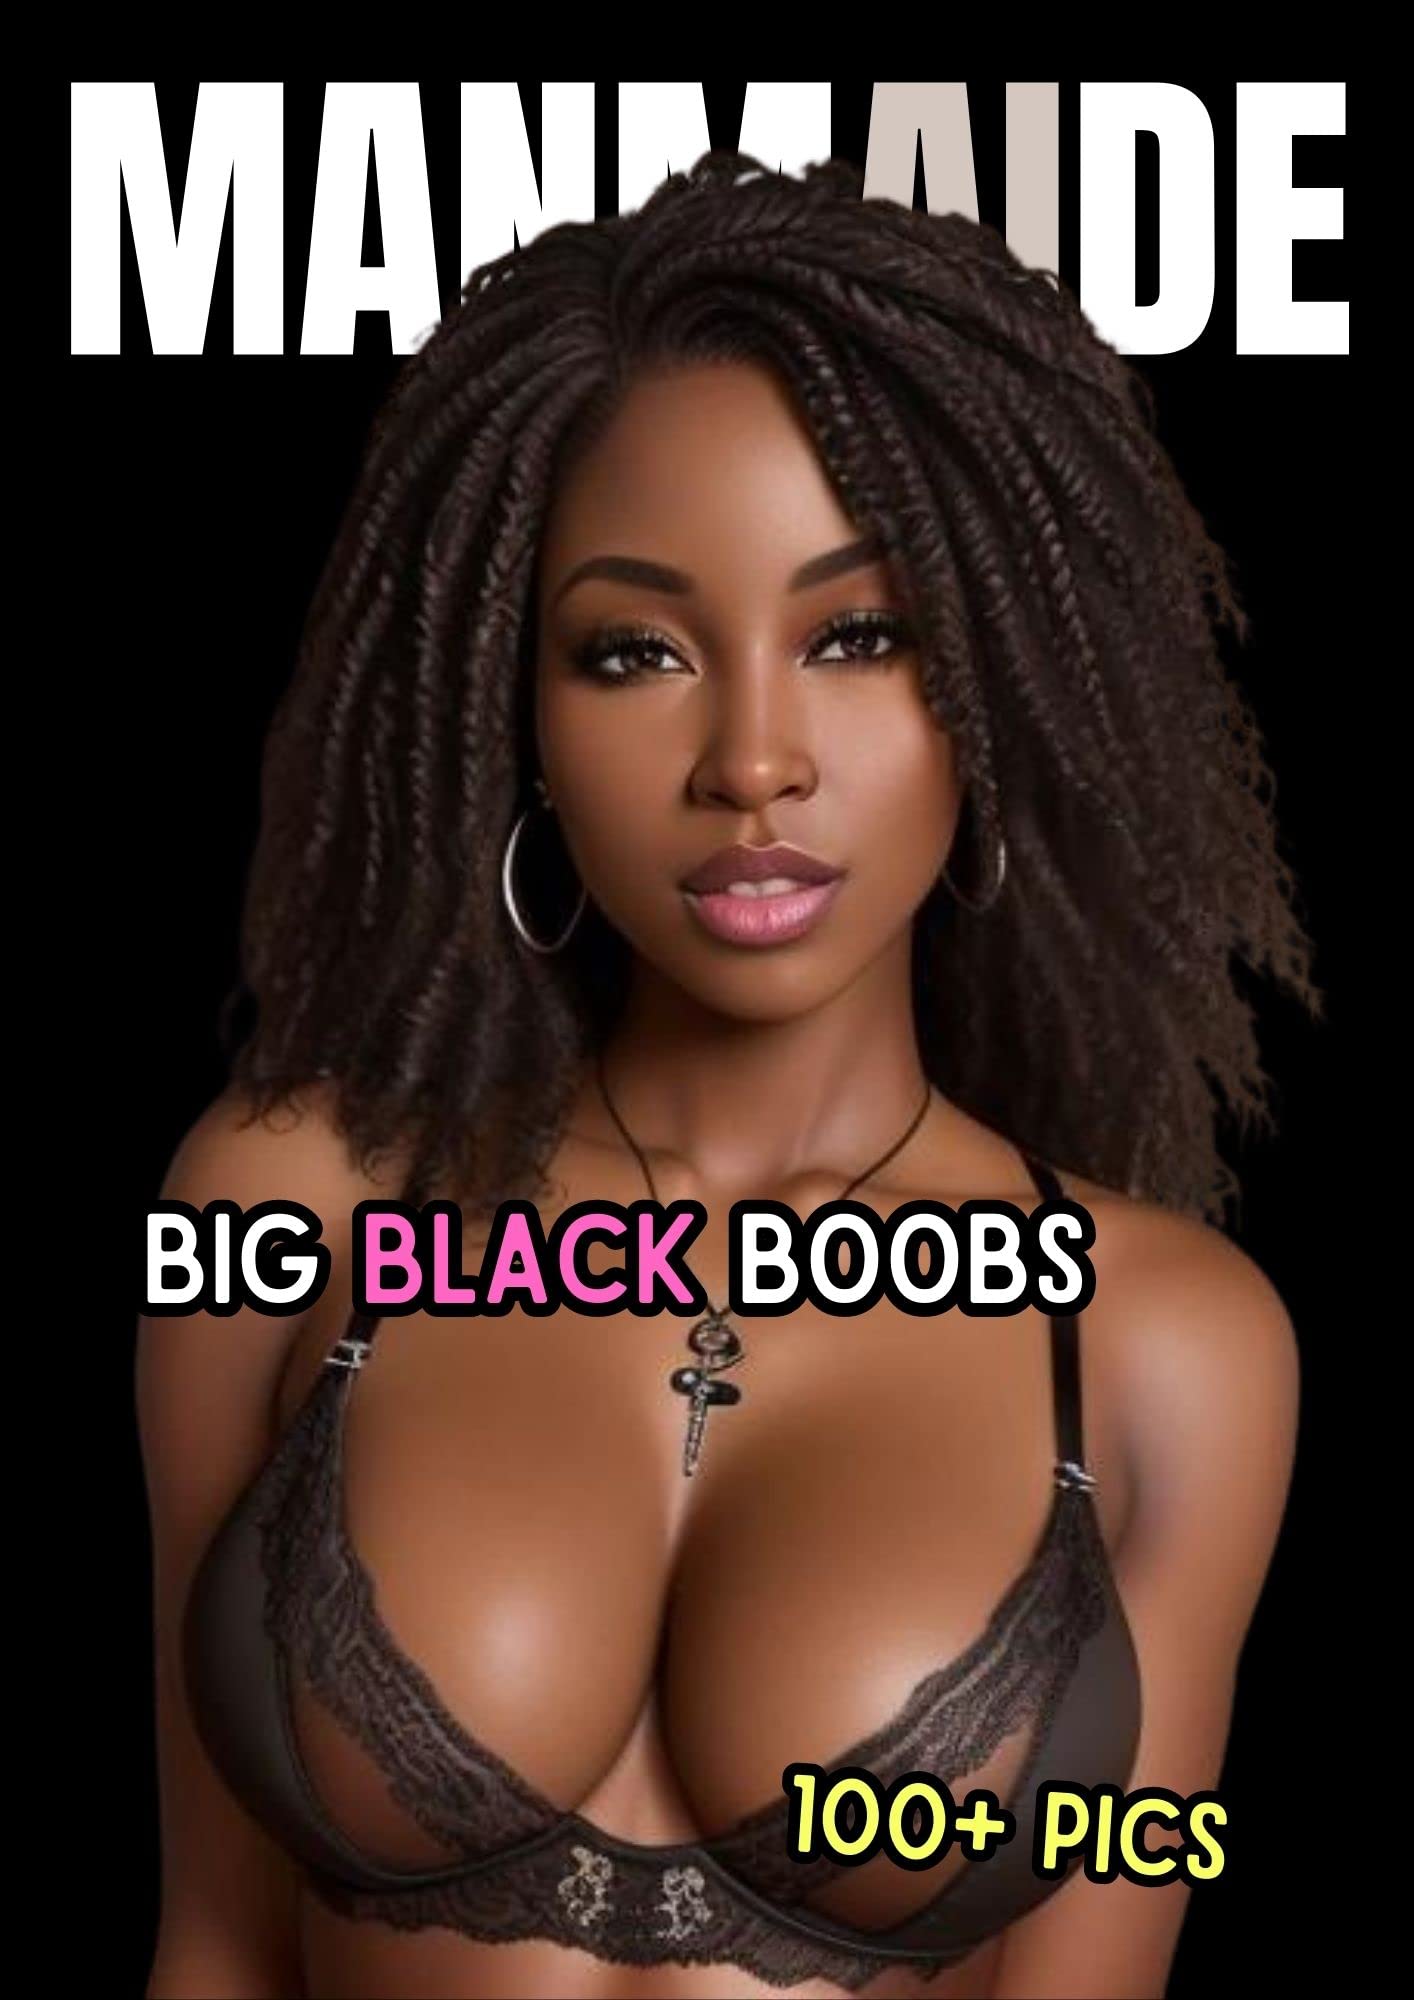 dale mallory share nice black boobs photos